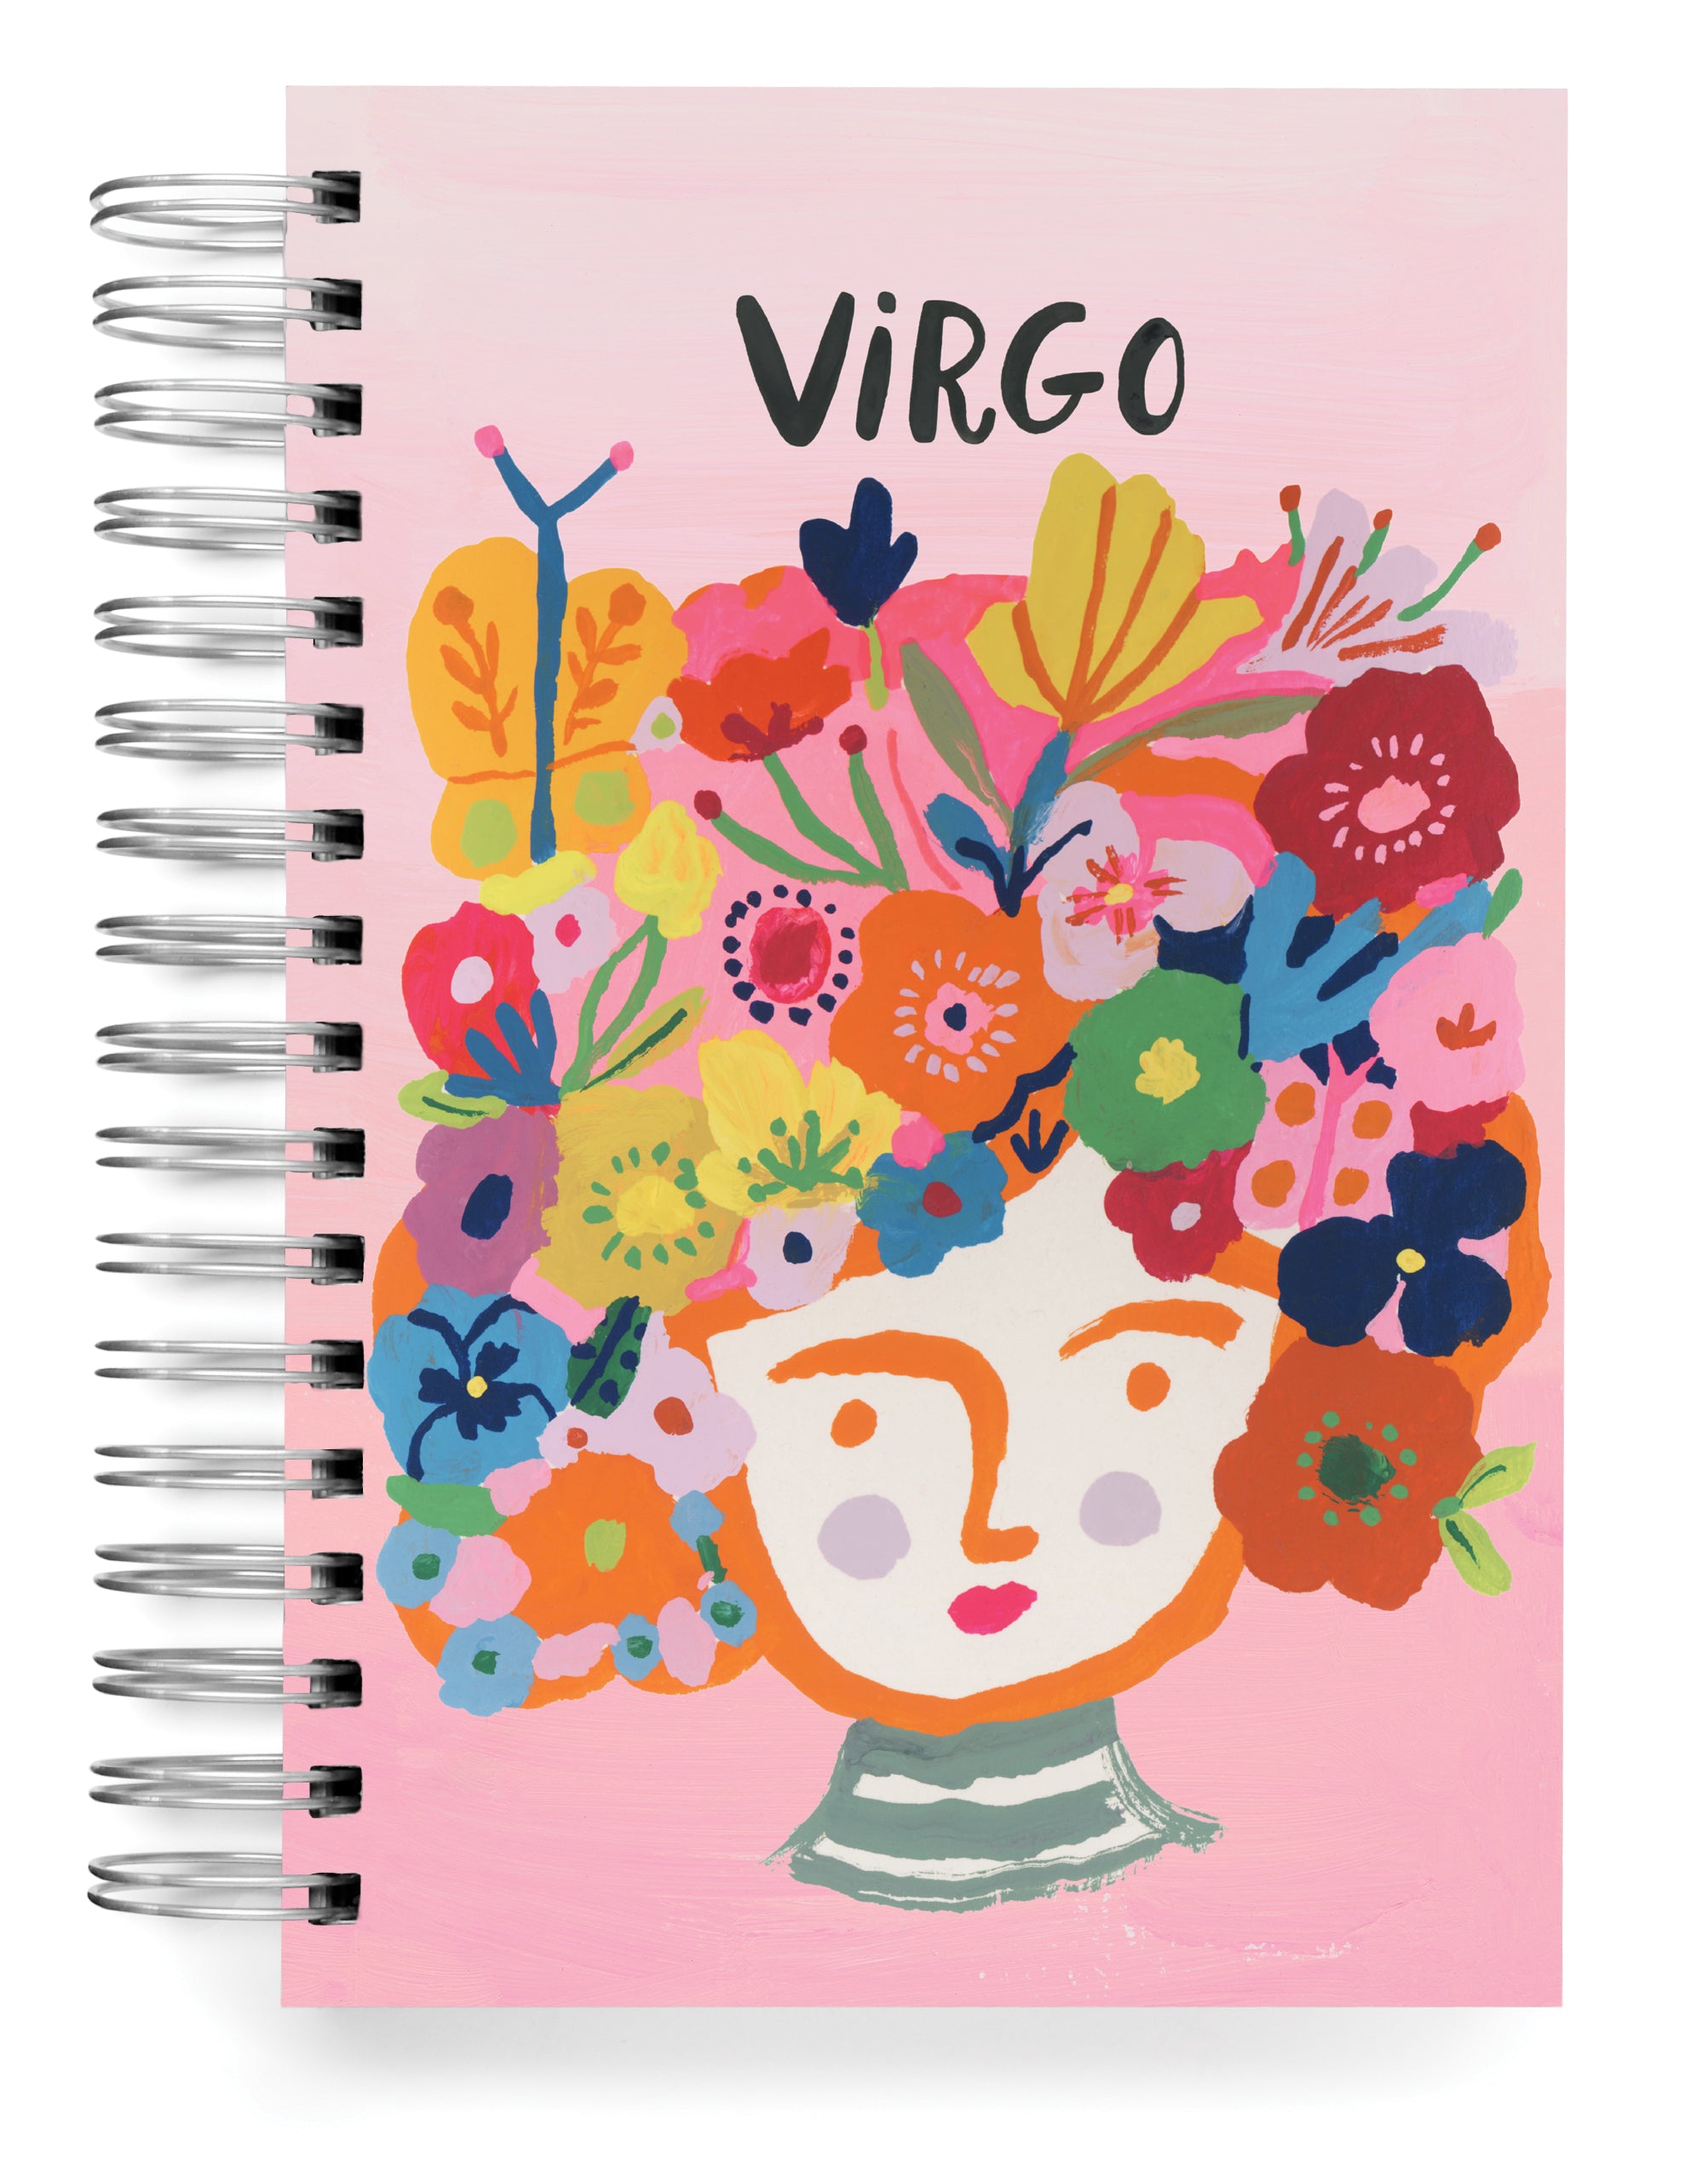 VIRGO Jumbo Journal